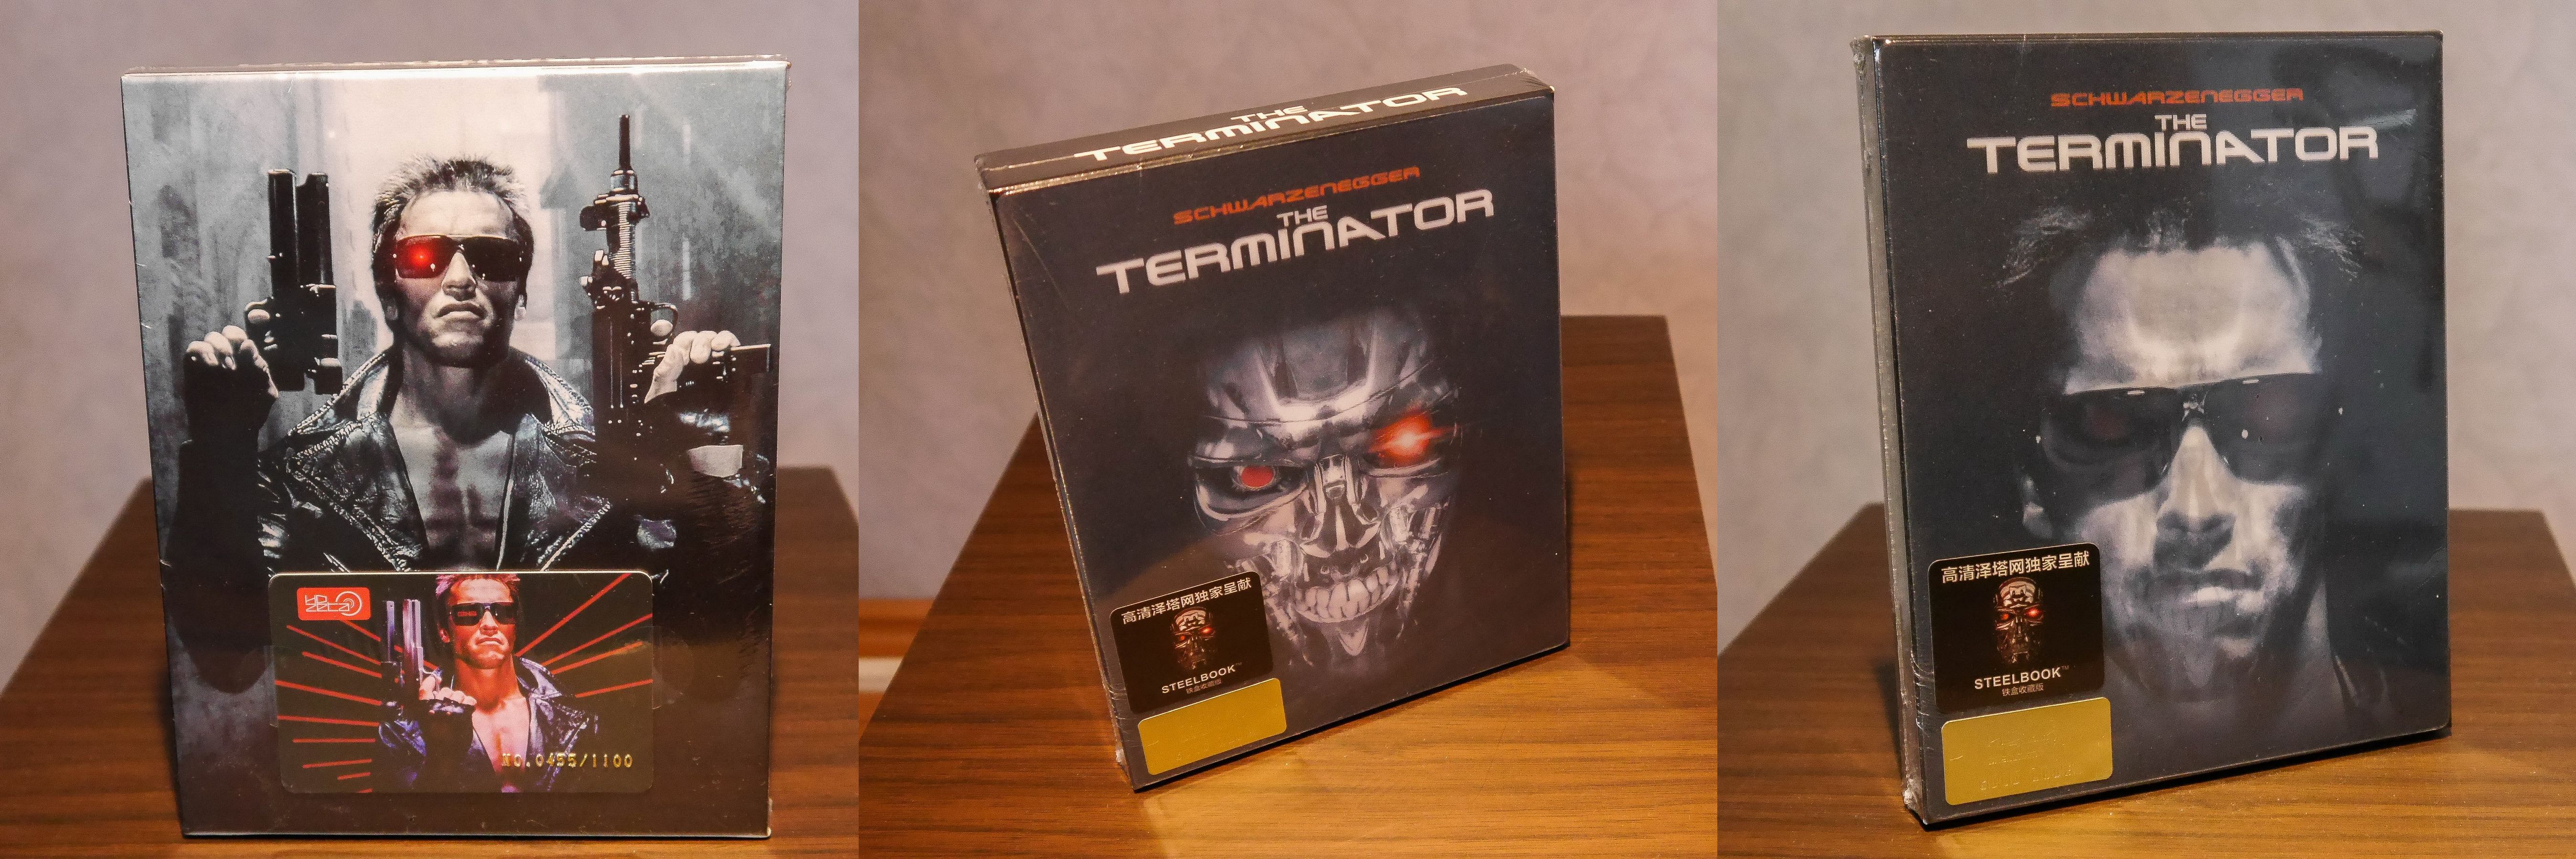 Terminator HD Zeta Bluray Steelbook Lenticular